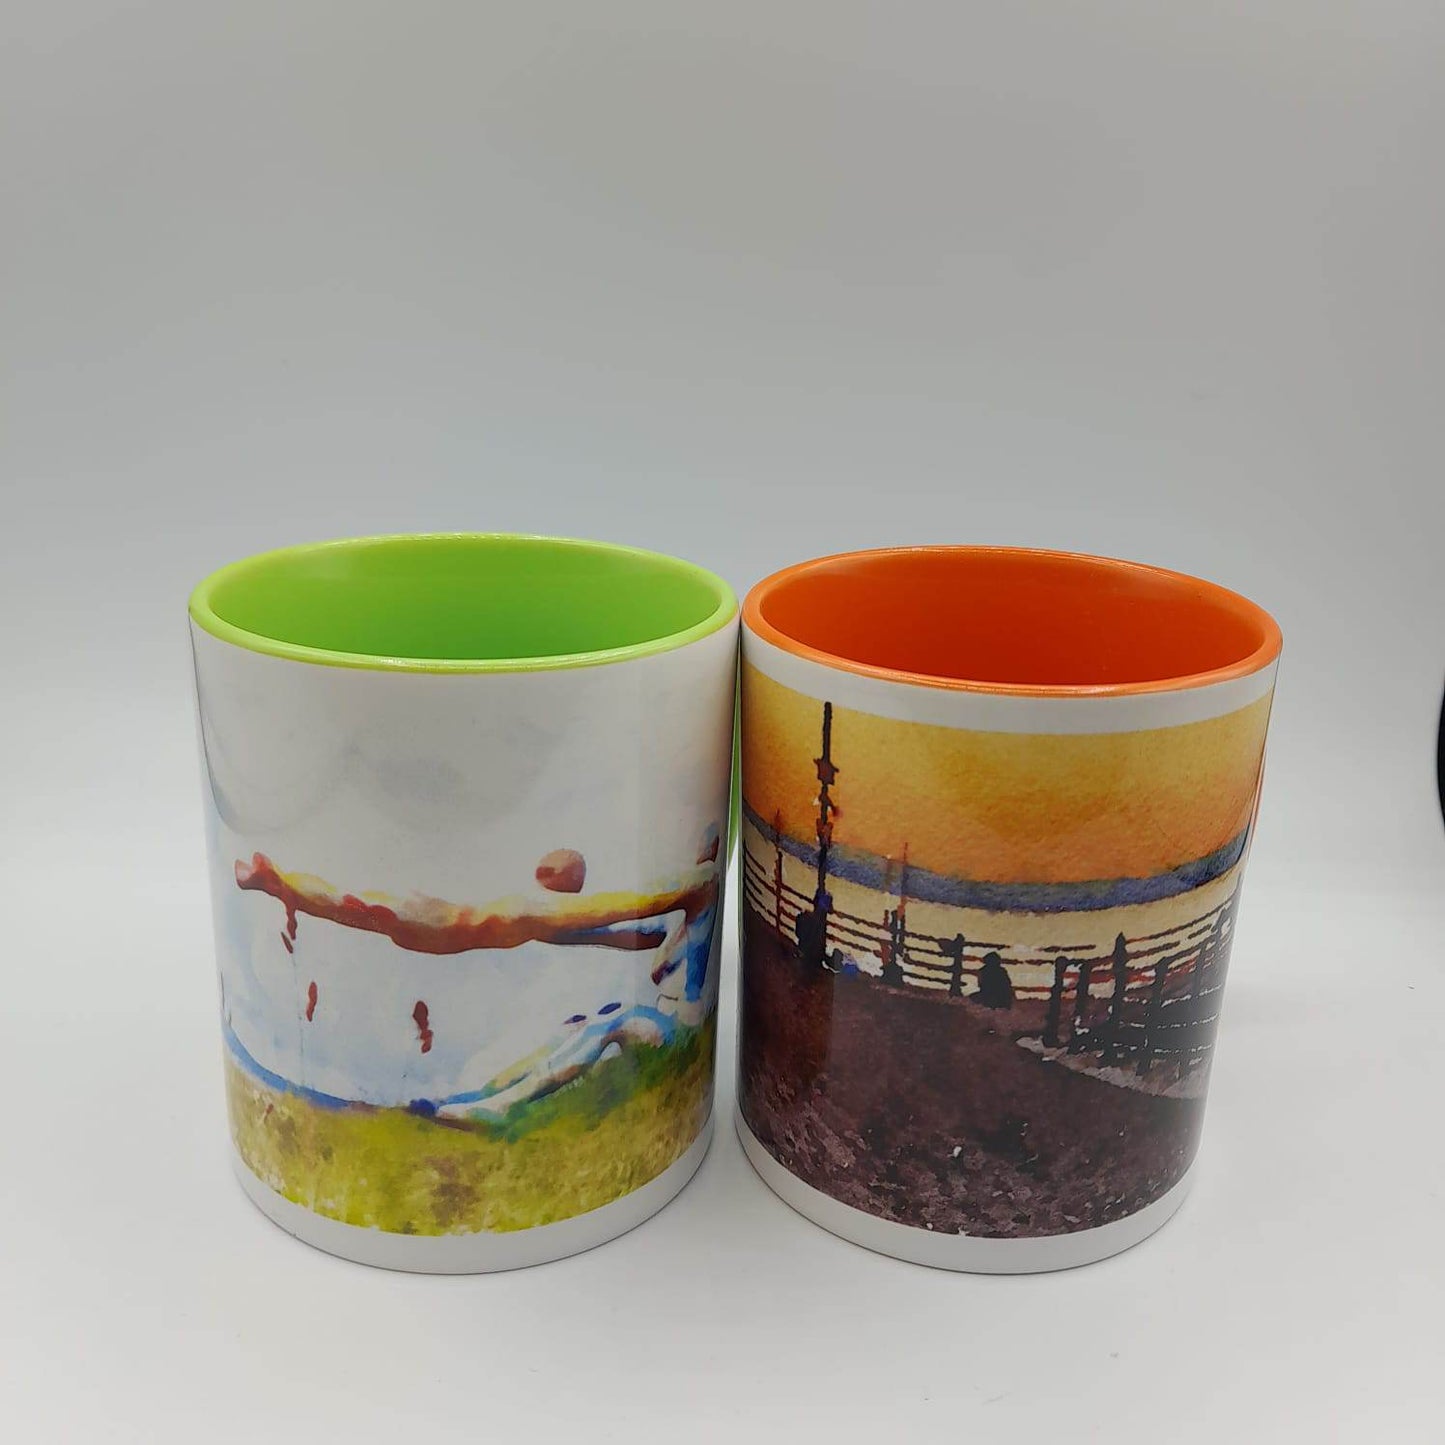 "Local Morecambe Art Collection Mugs"